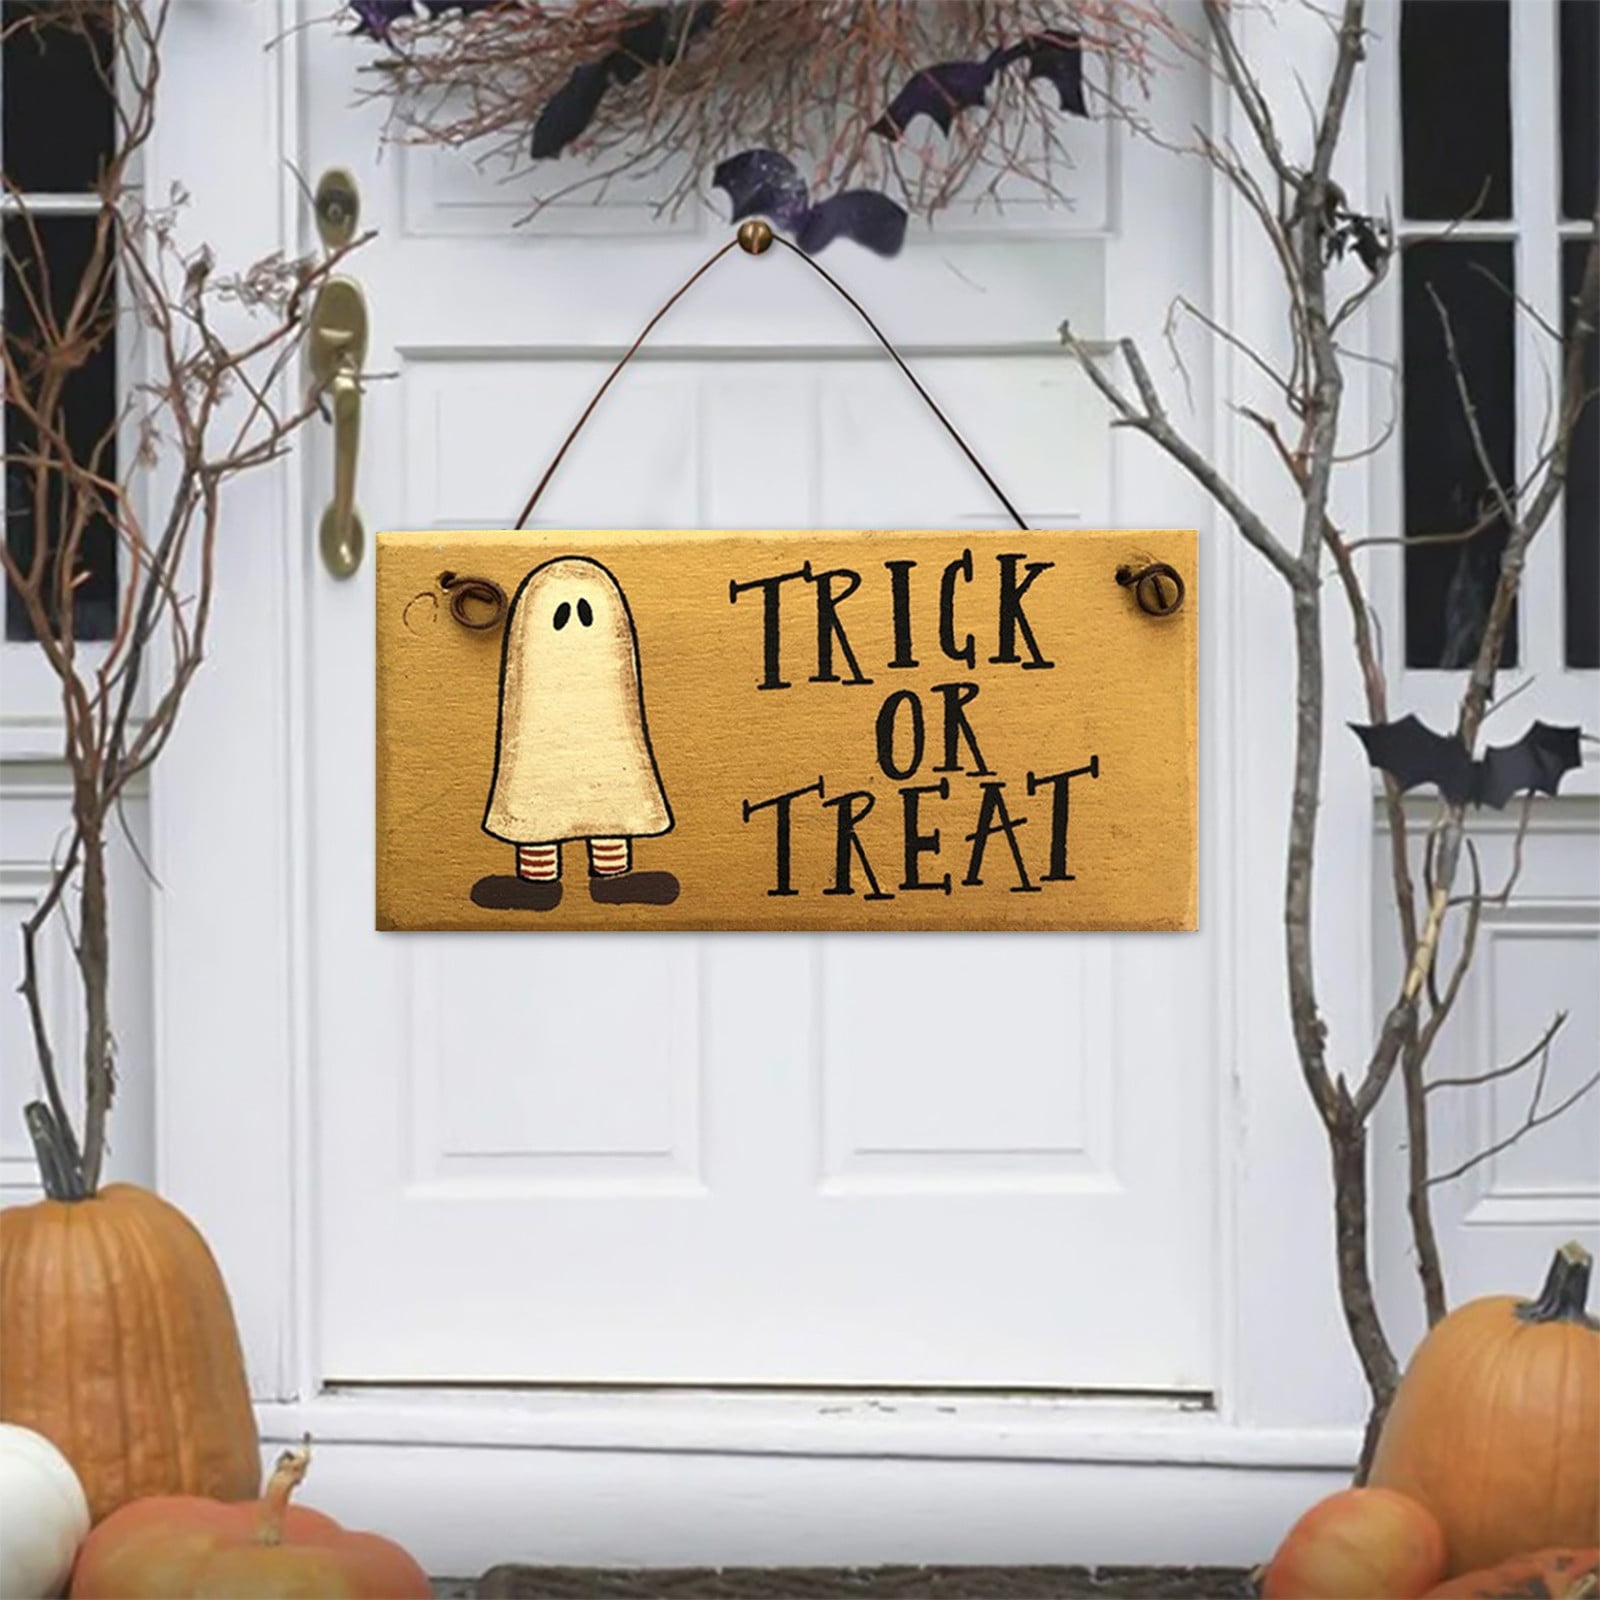  Halloween Cute Witch House Decorations Door Hanger Sign,  Wooden Halloween Welcome Sign, Cute Halloween House Door Wall Decorations  with Rope : Patio, Lawn & Garden